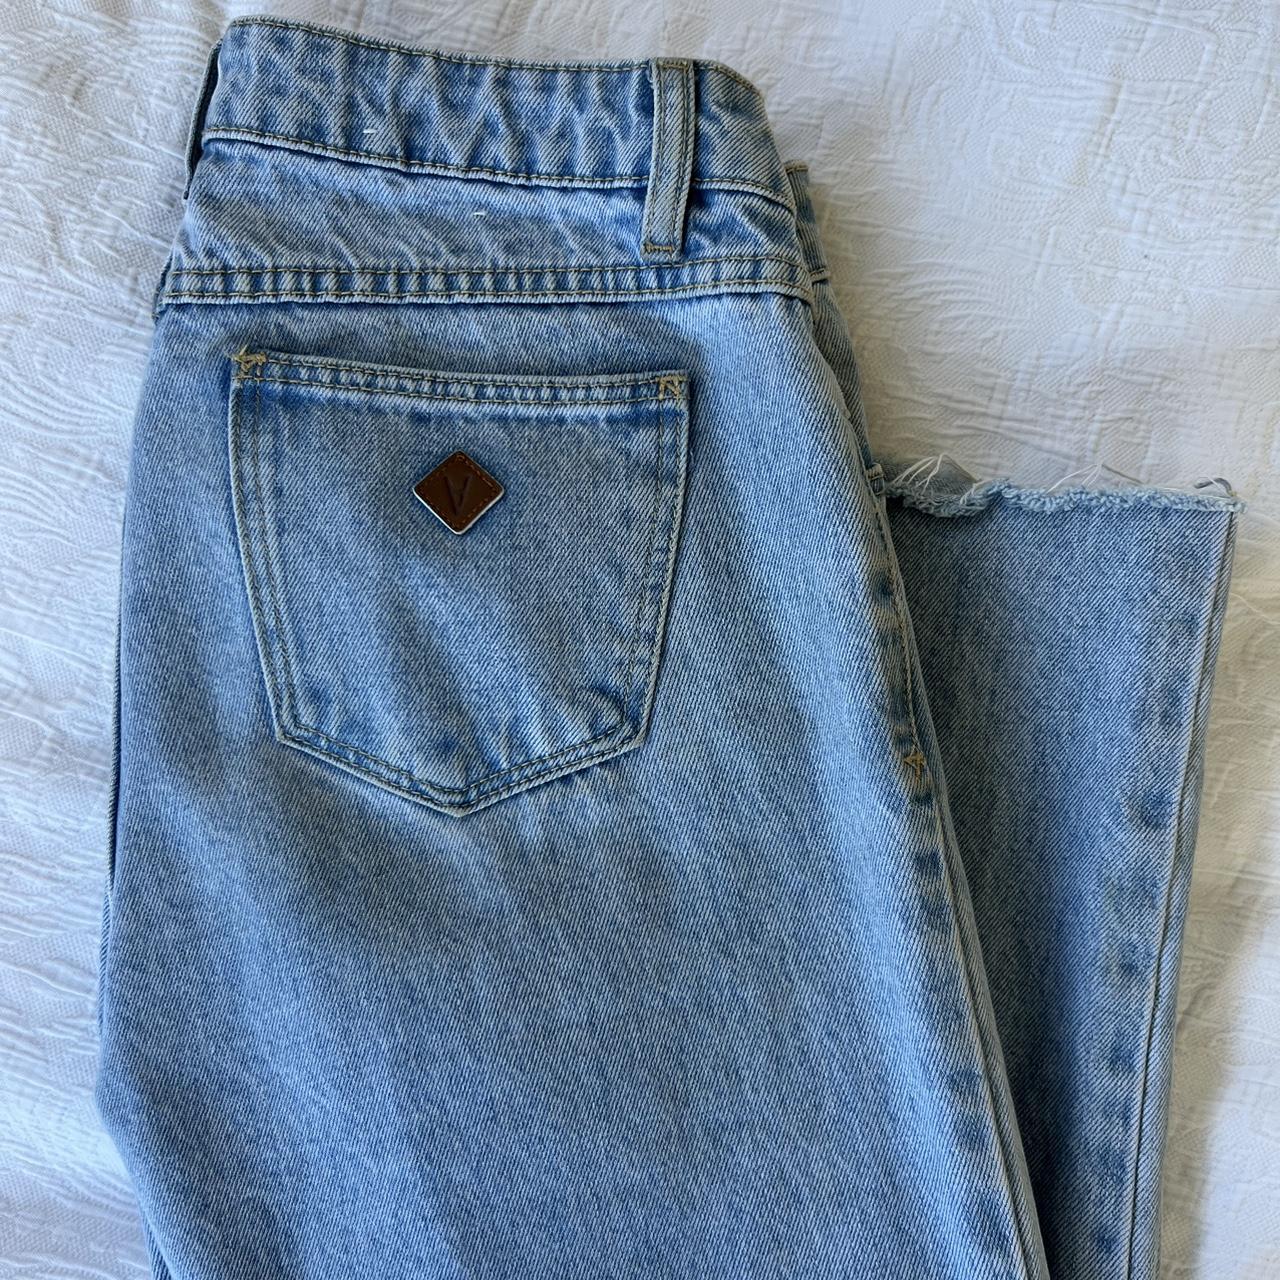 abrand ‘99 low rise jeans - Depop